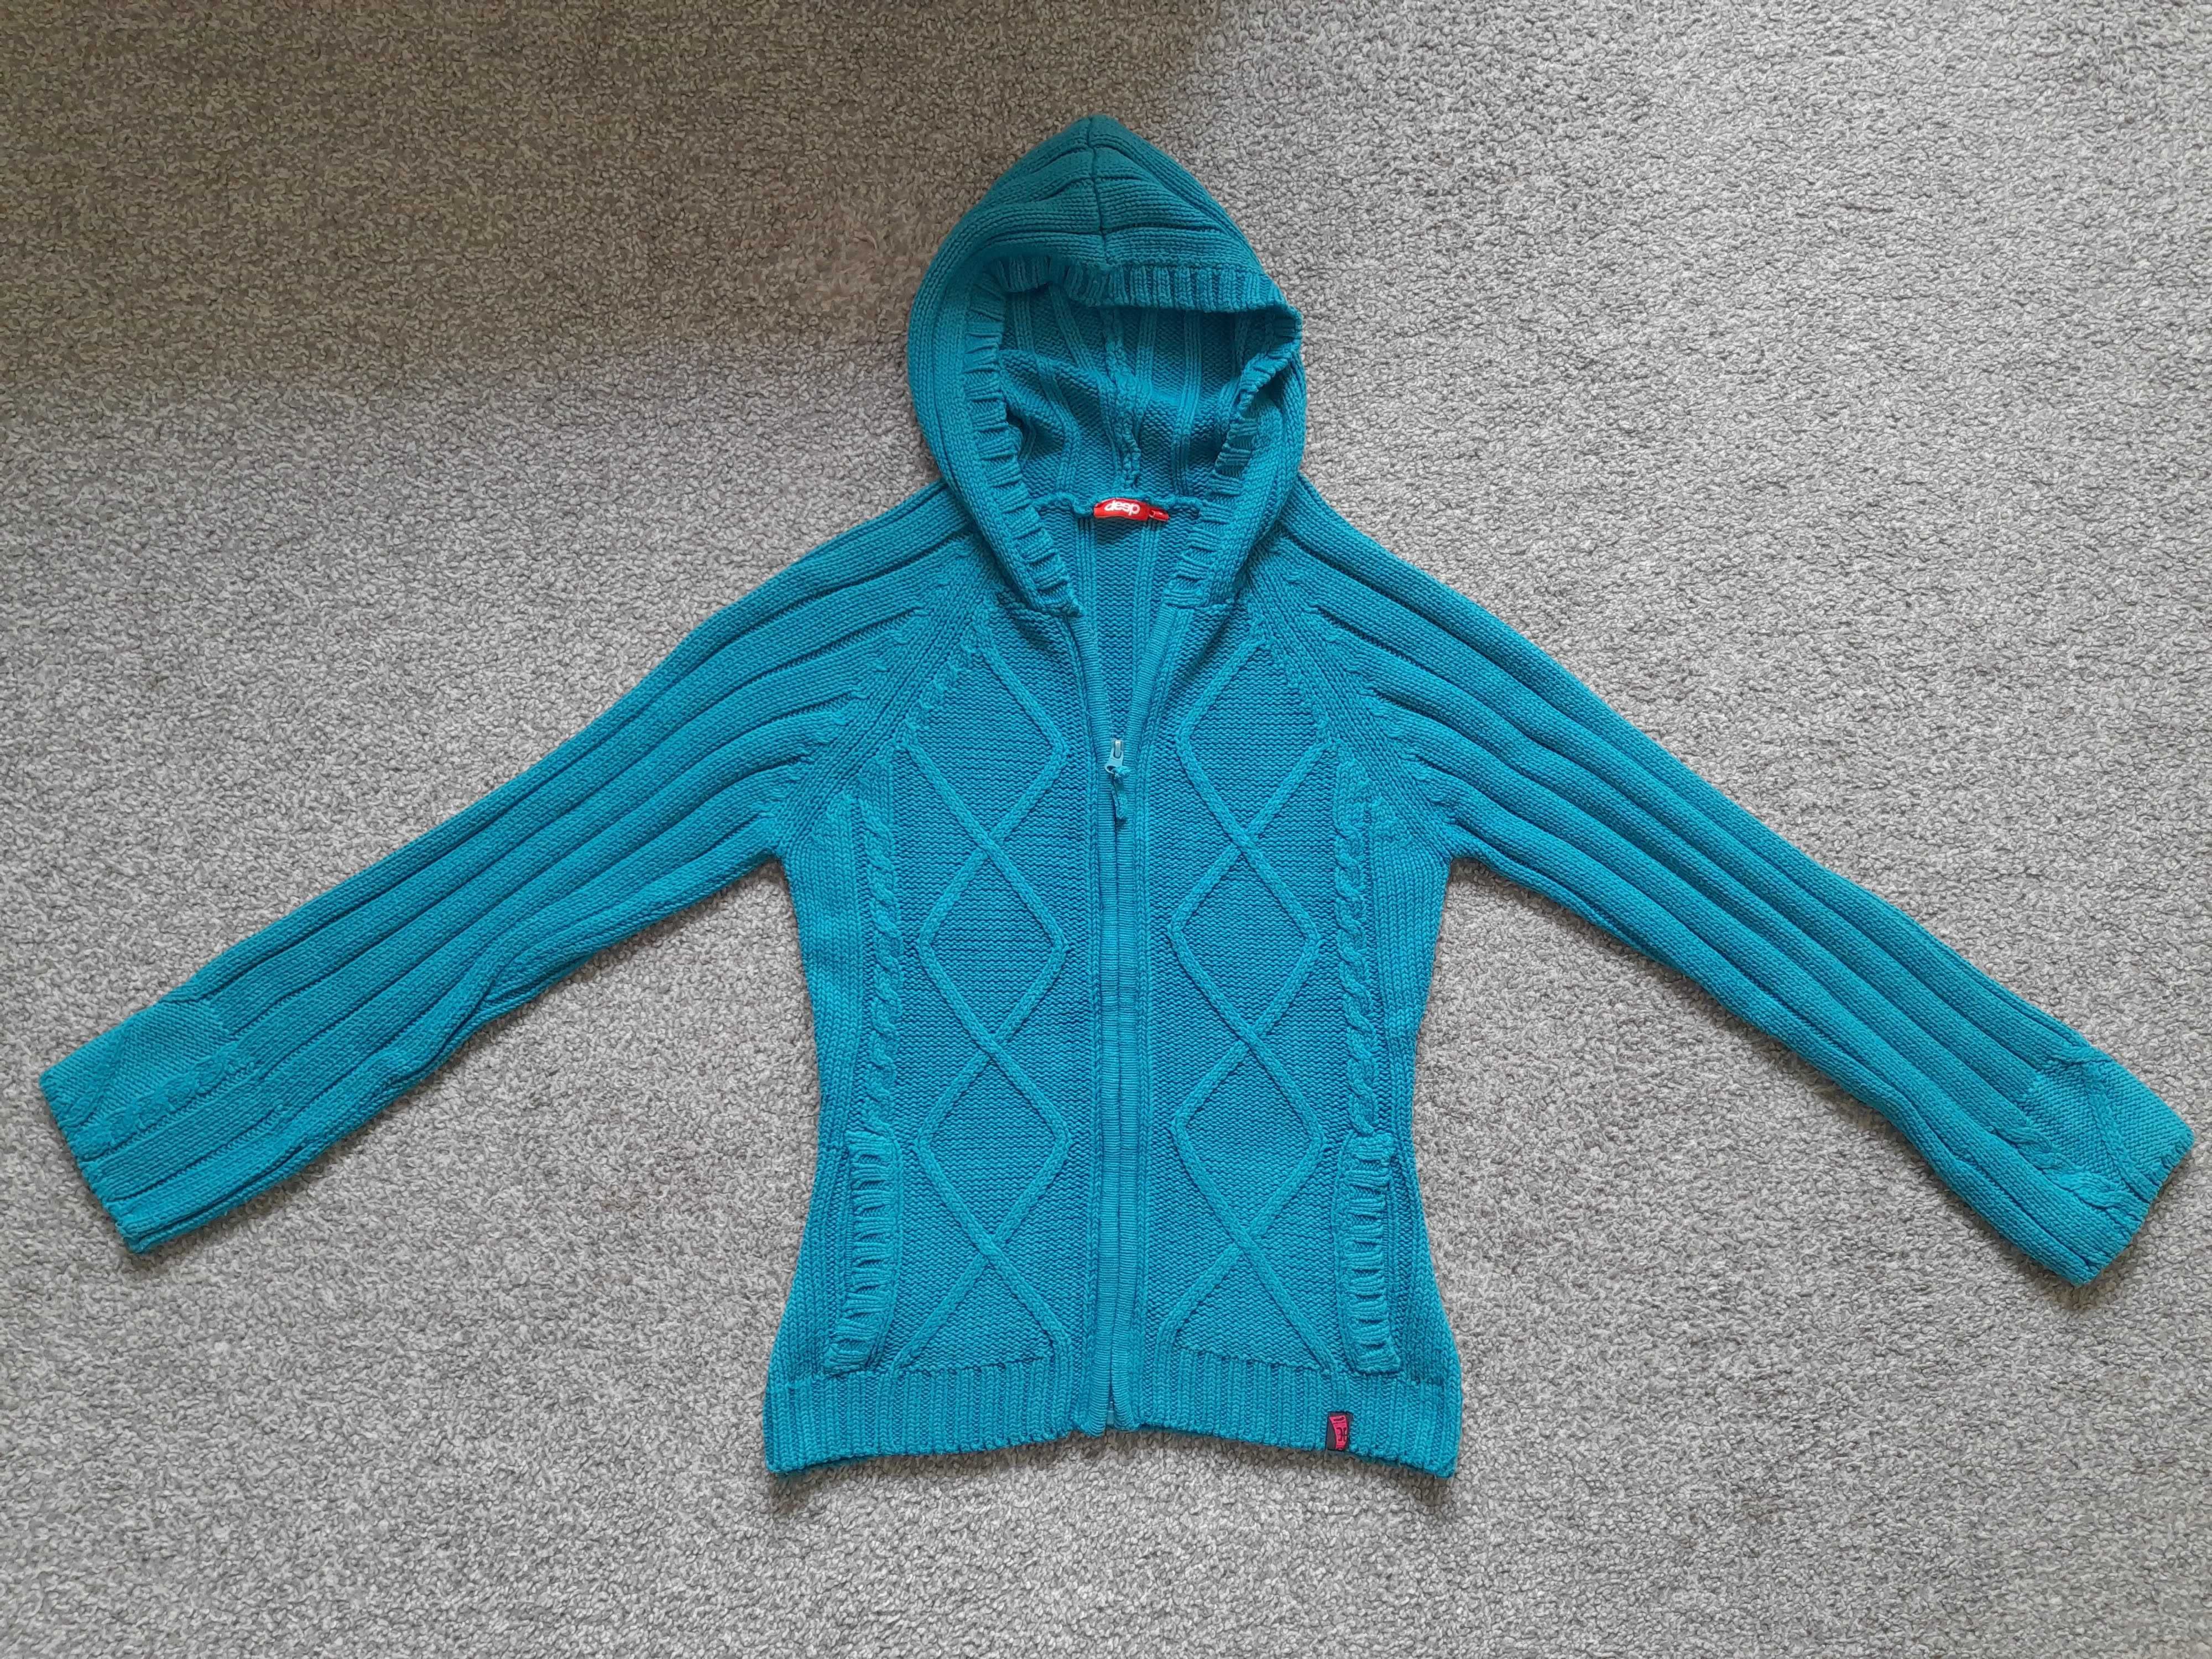 Gruby ciepły damski sweter kaptur Deep r.S M pachy 43cm x 2 turkus